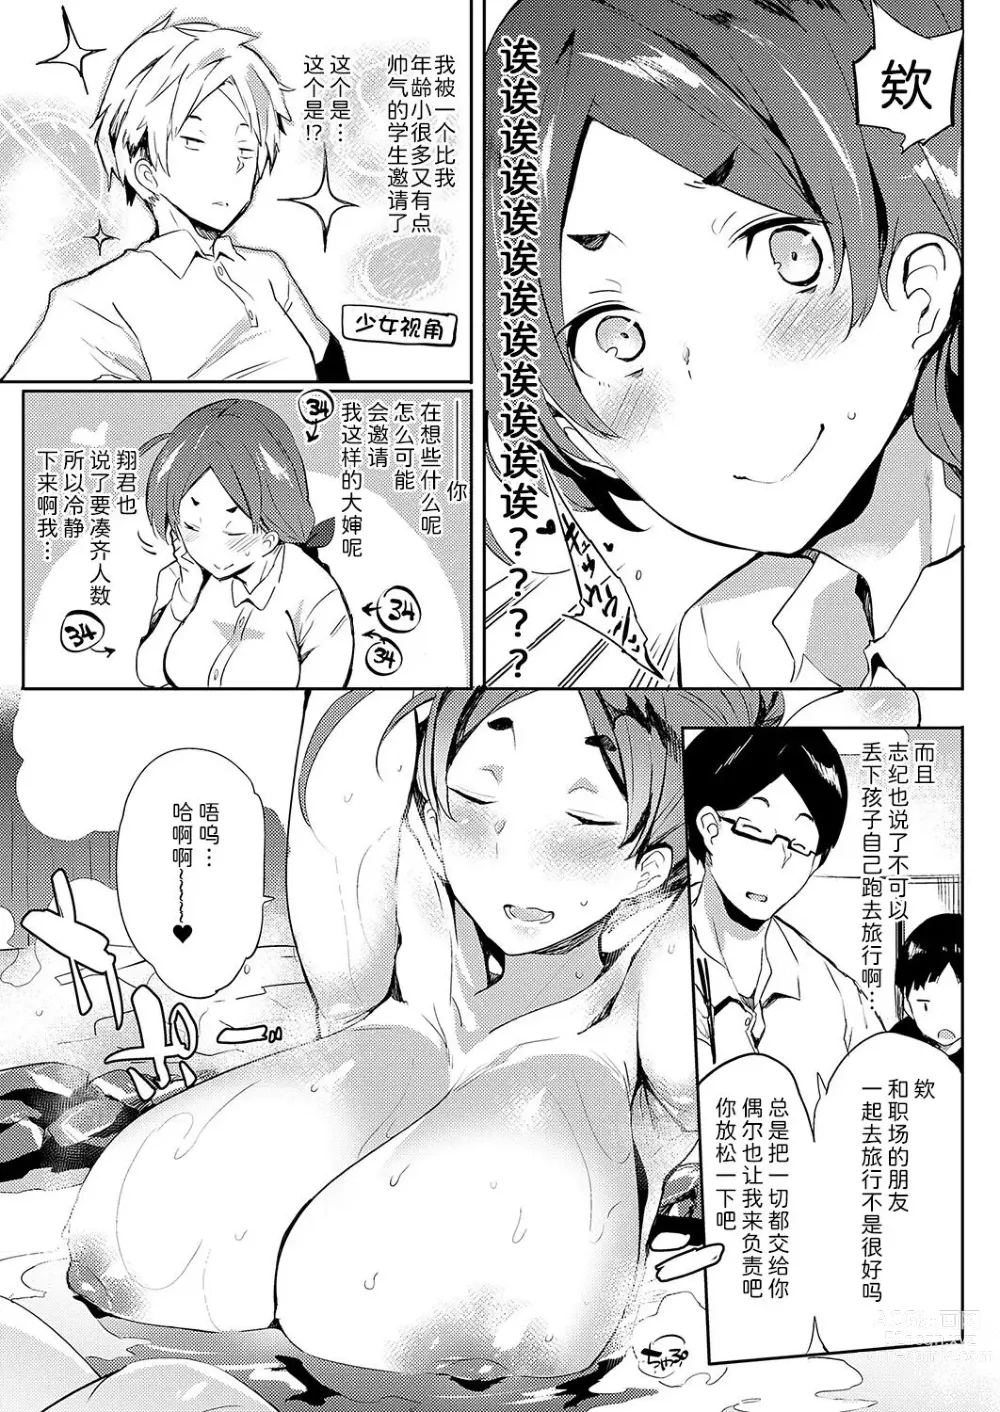 Page 4 of manga Sutsukuri torabera